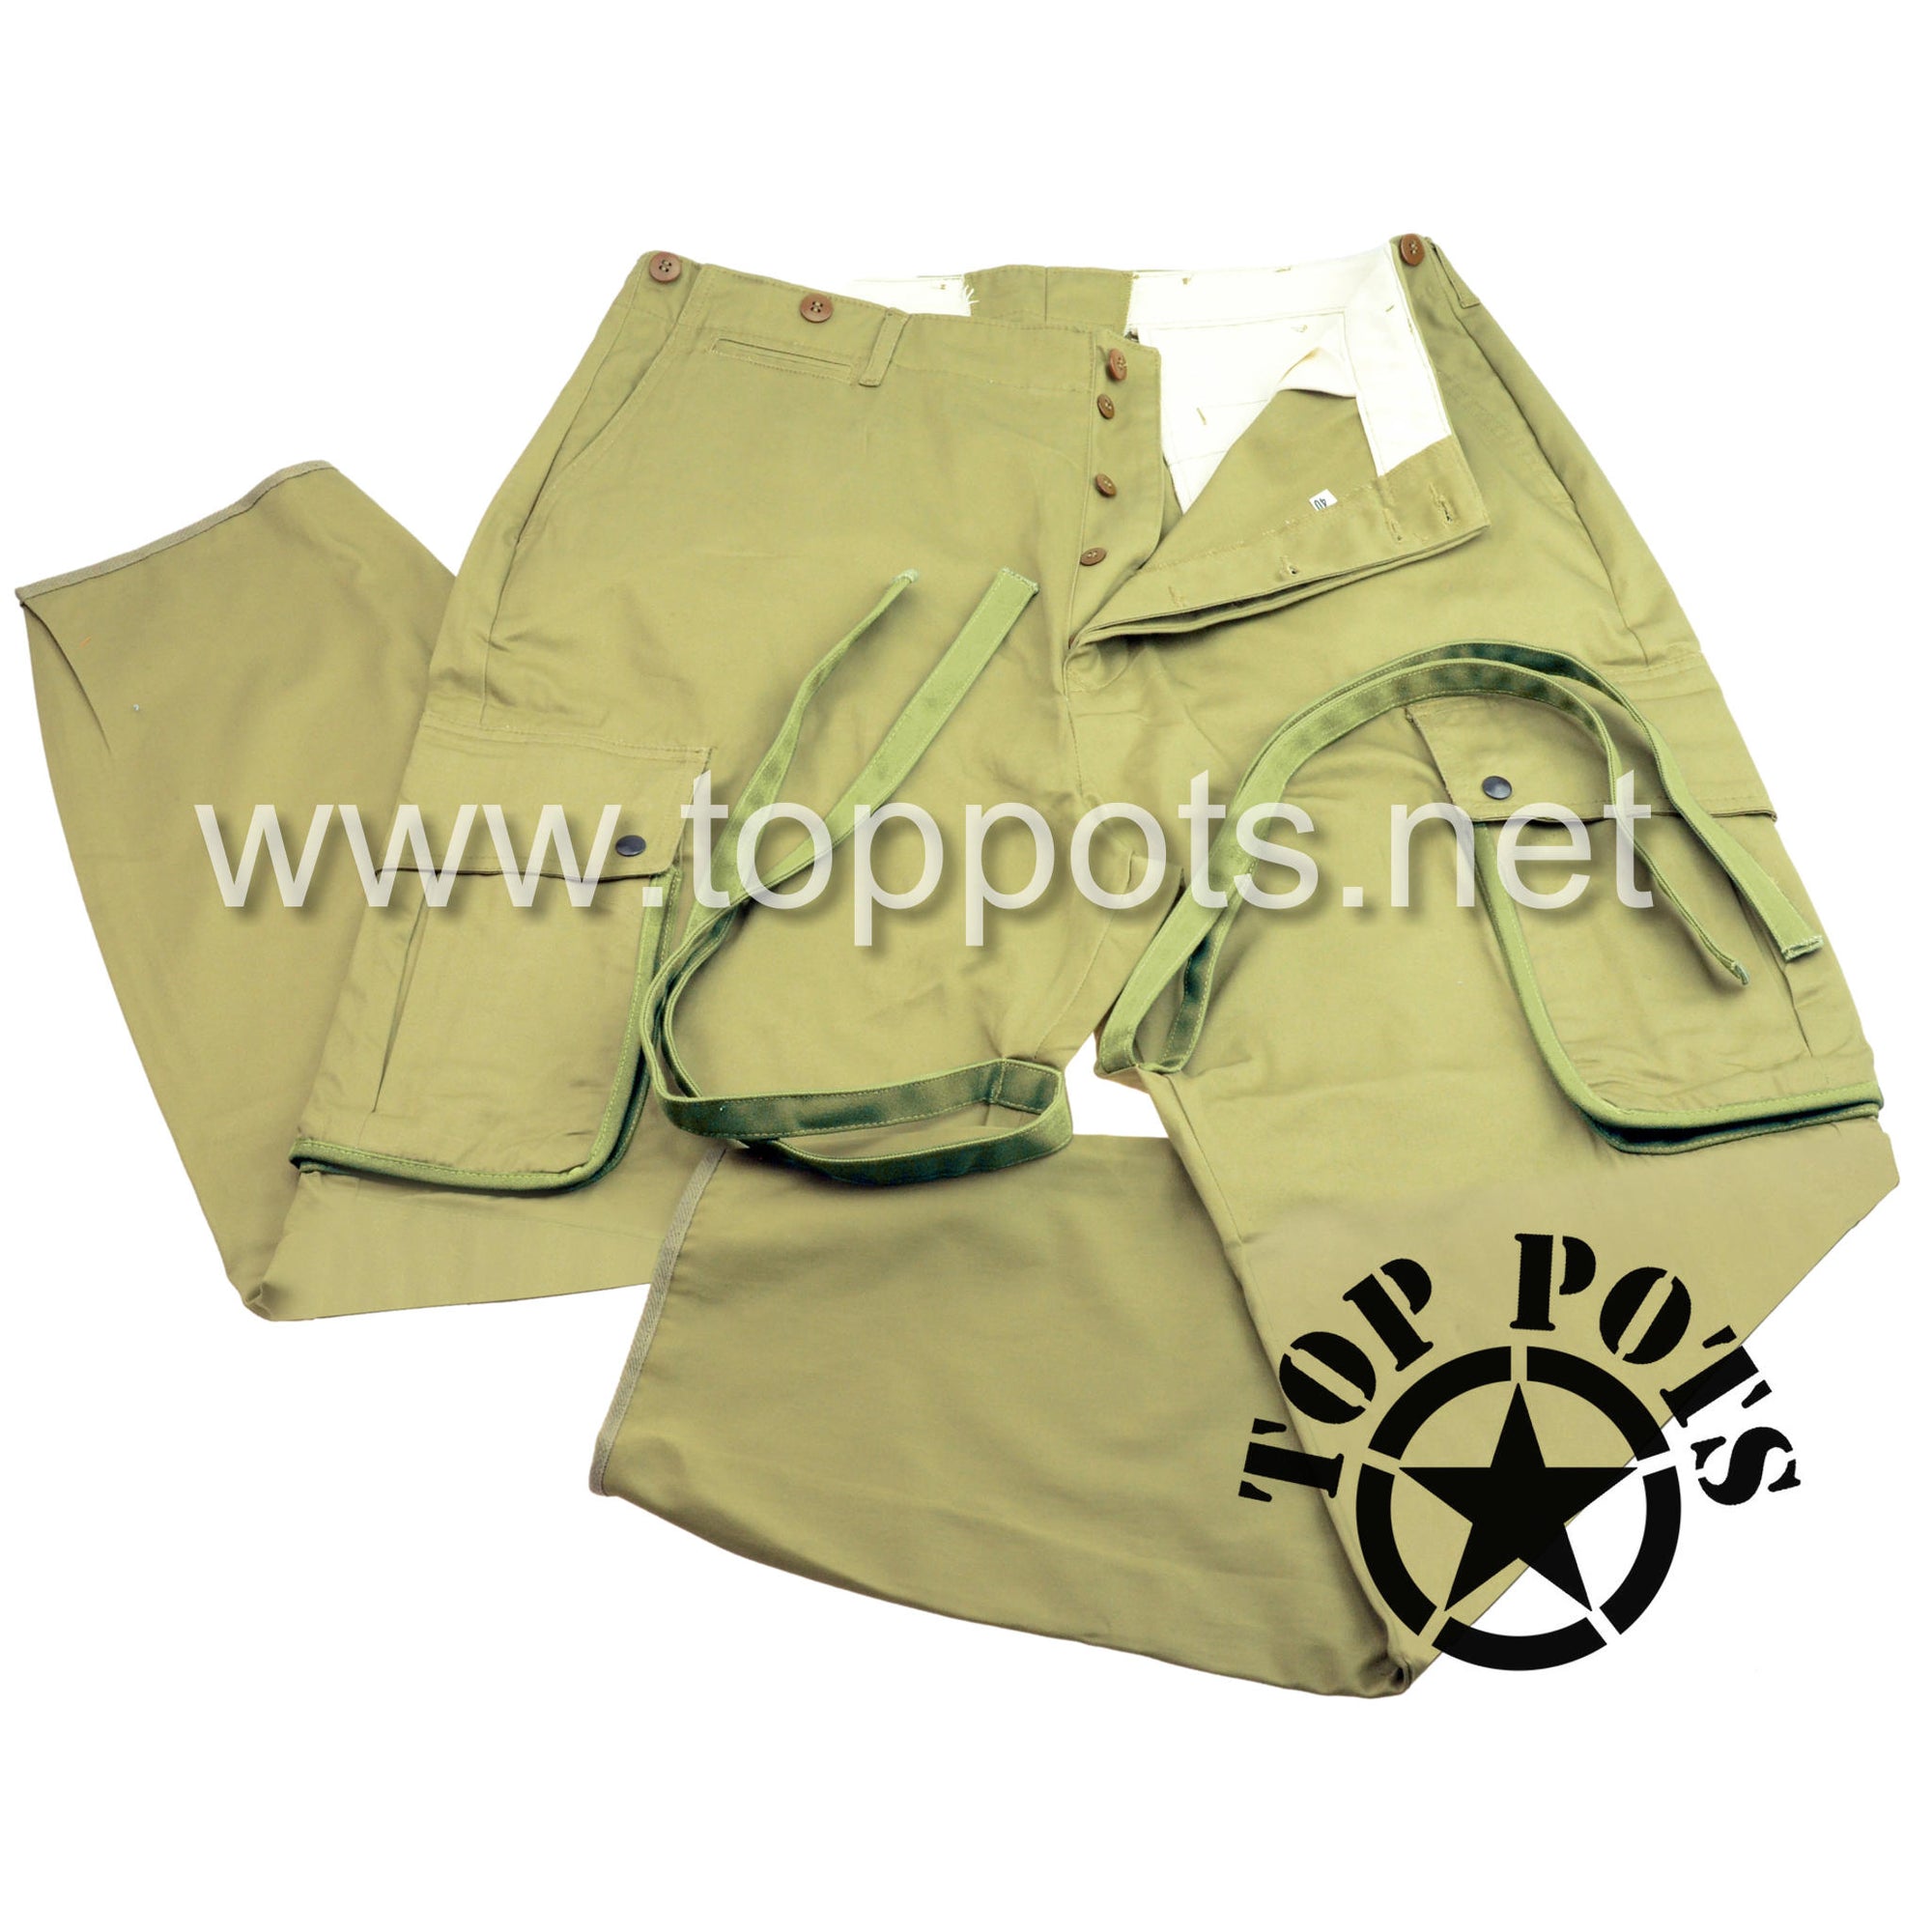 WWII US Army Reproduction M1942 Cotton Enlisted Paratrooper Combat Uniform Airborne Pants – Trousers, Parachute Jumper, M1942